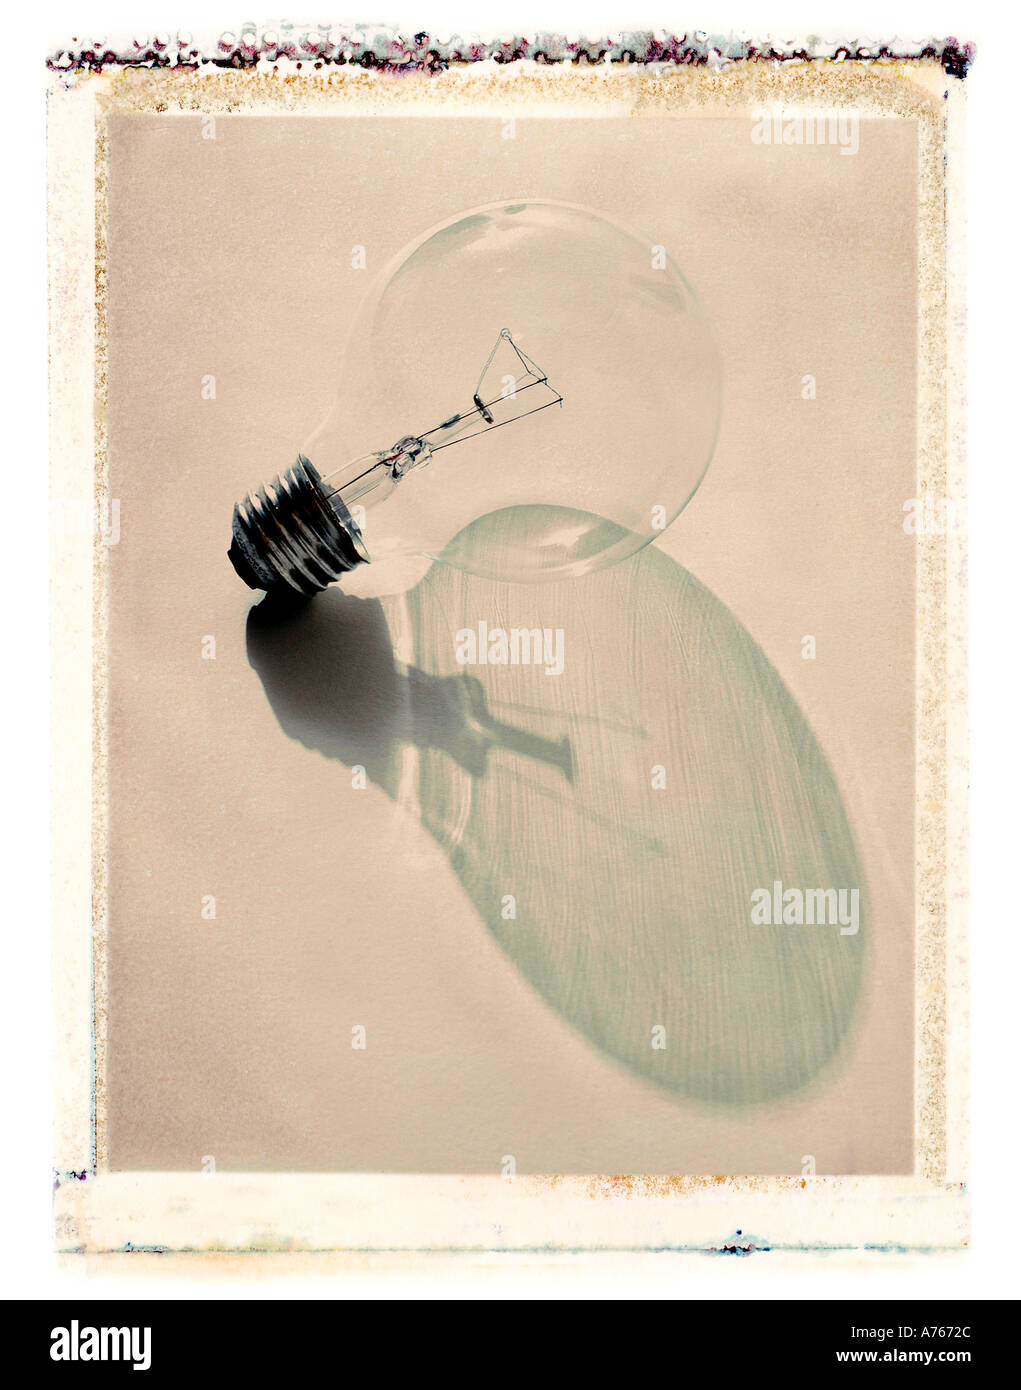 lightbulb with shadow Stock Photo